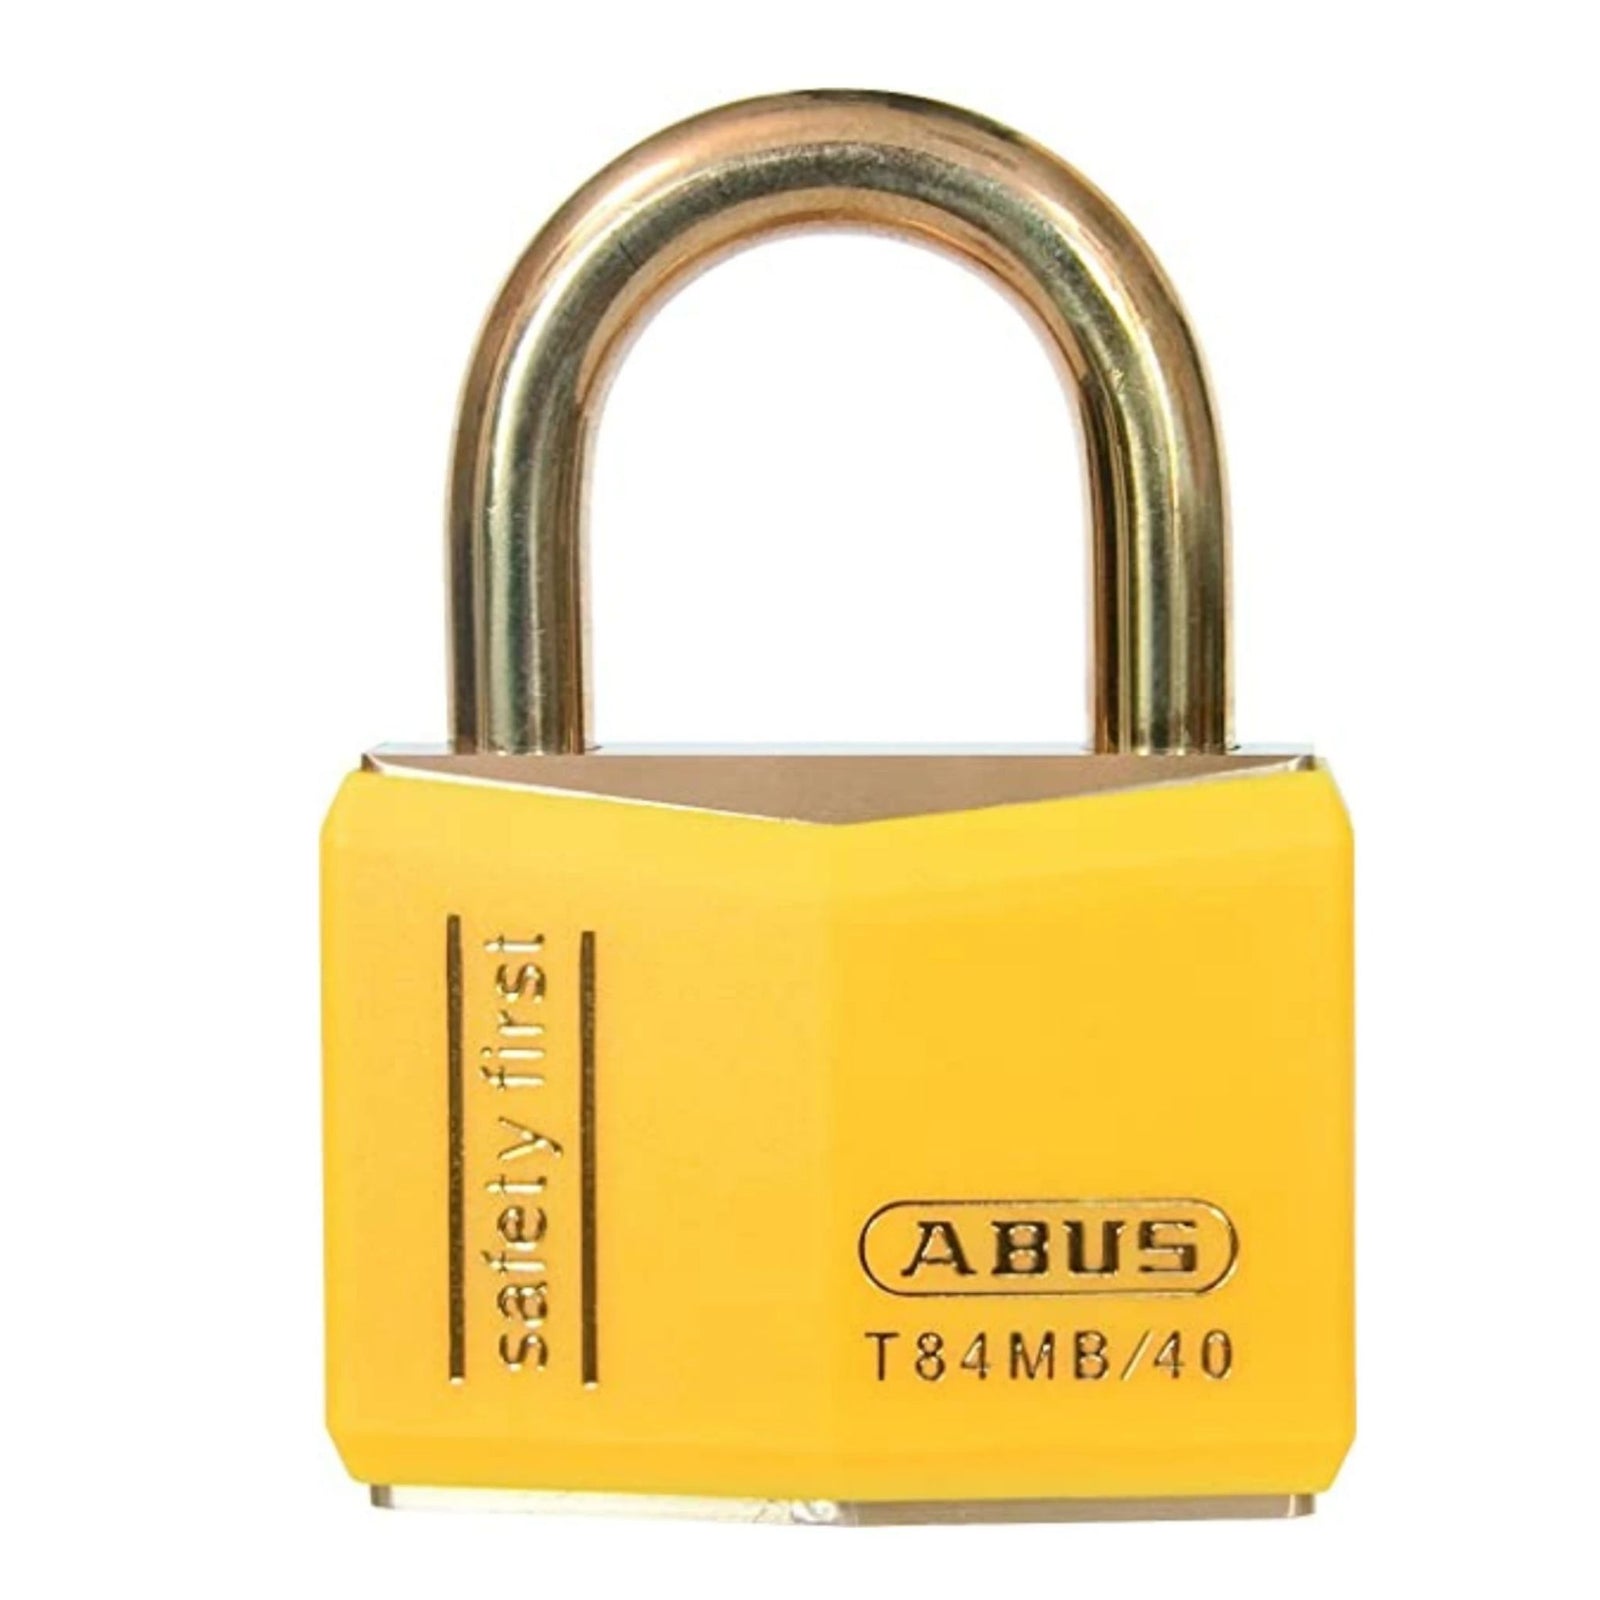 ABUS 55/50 Solid Brass Padlock —